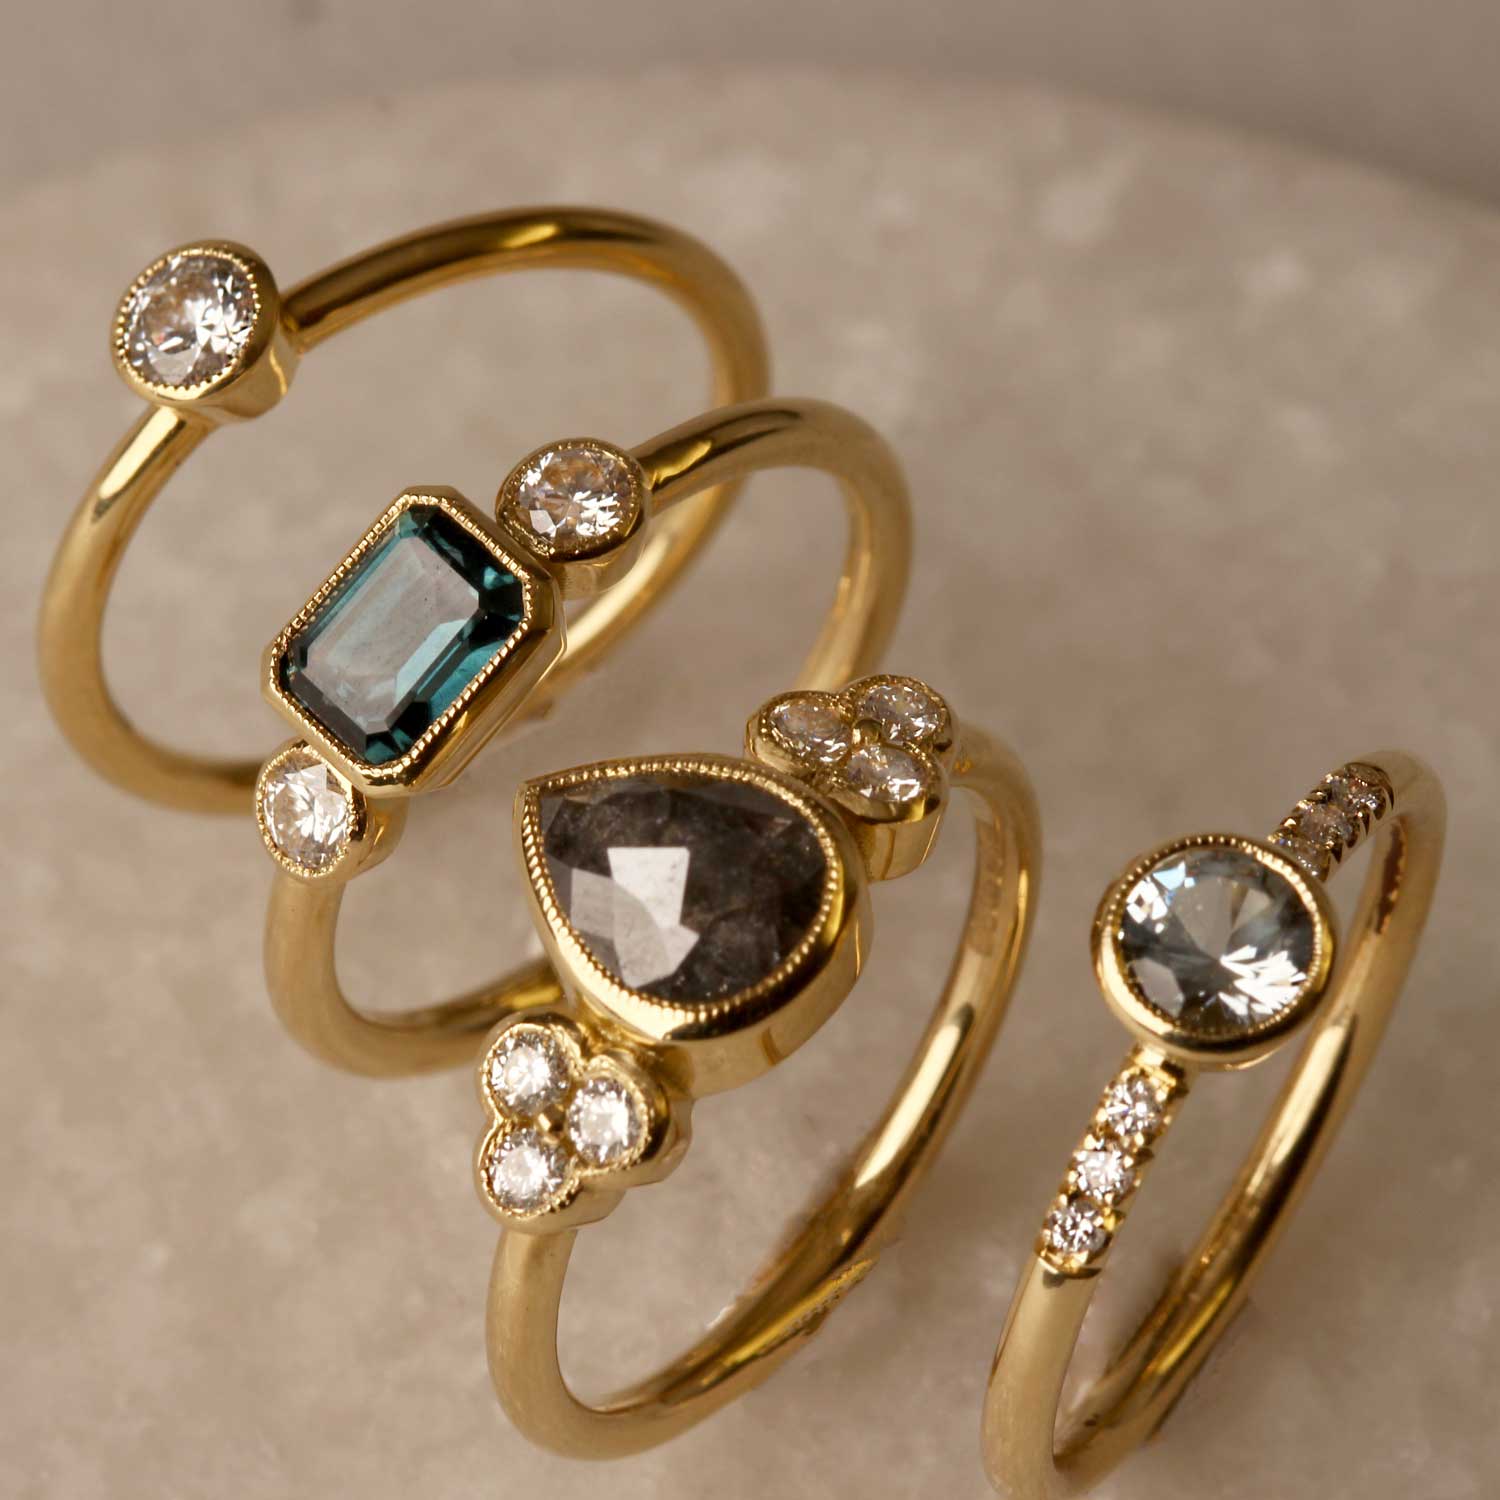 Pave Bridge Engagement Ring - Frank Reubel Fine Jewelry